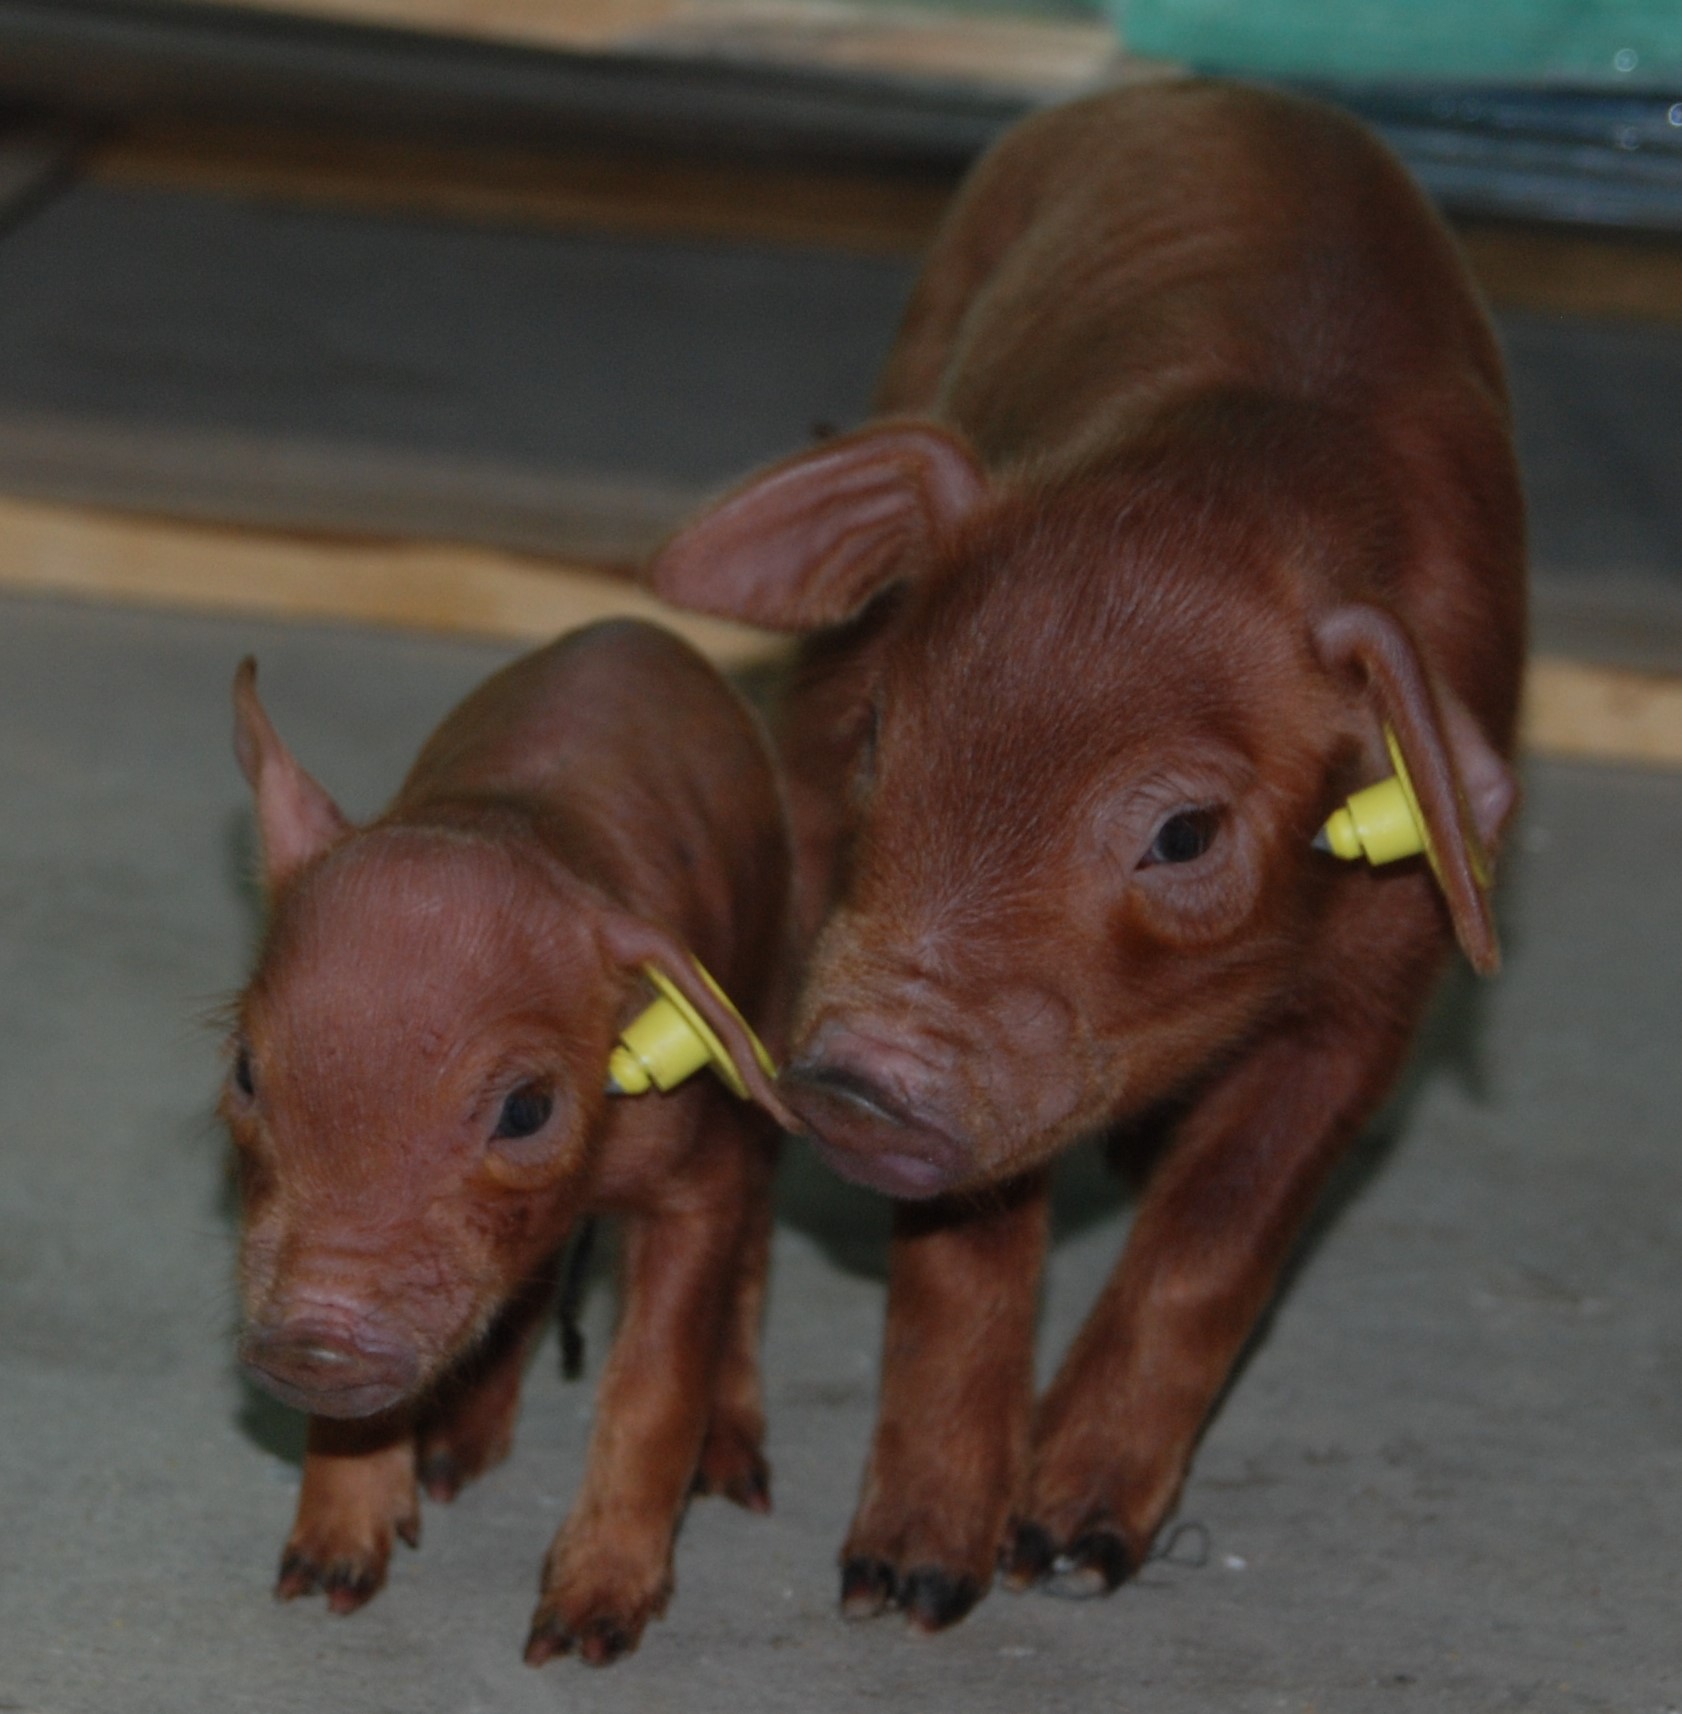 Iberian piglets corresponding to a prenatal programming experiment 